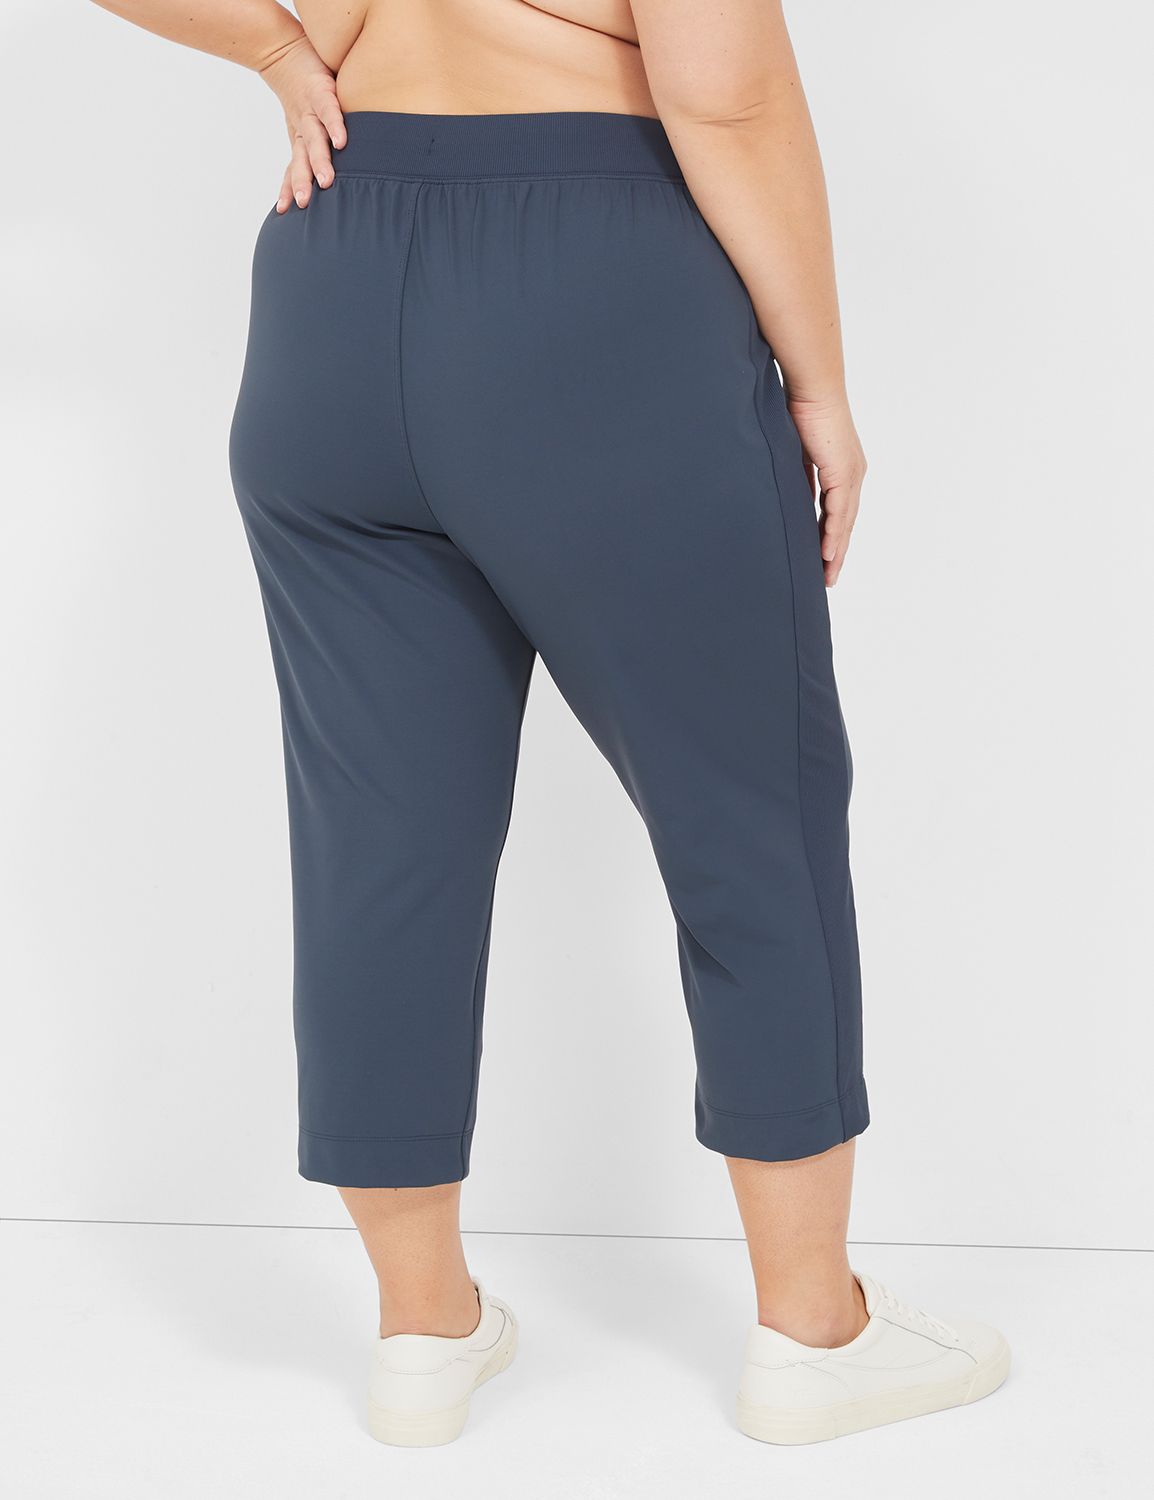 nsendm Unisex Pants Adult Loose Cotton Pants Women Yoga Womens Casual  Comfort Printed High Waist Leggings Yoga Pants Womens plus Size Yoga(Blue,  XL)